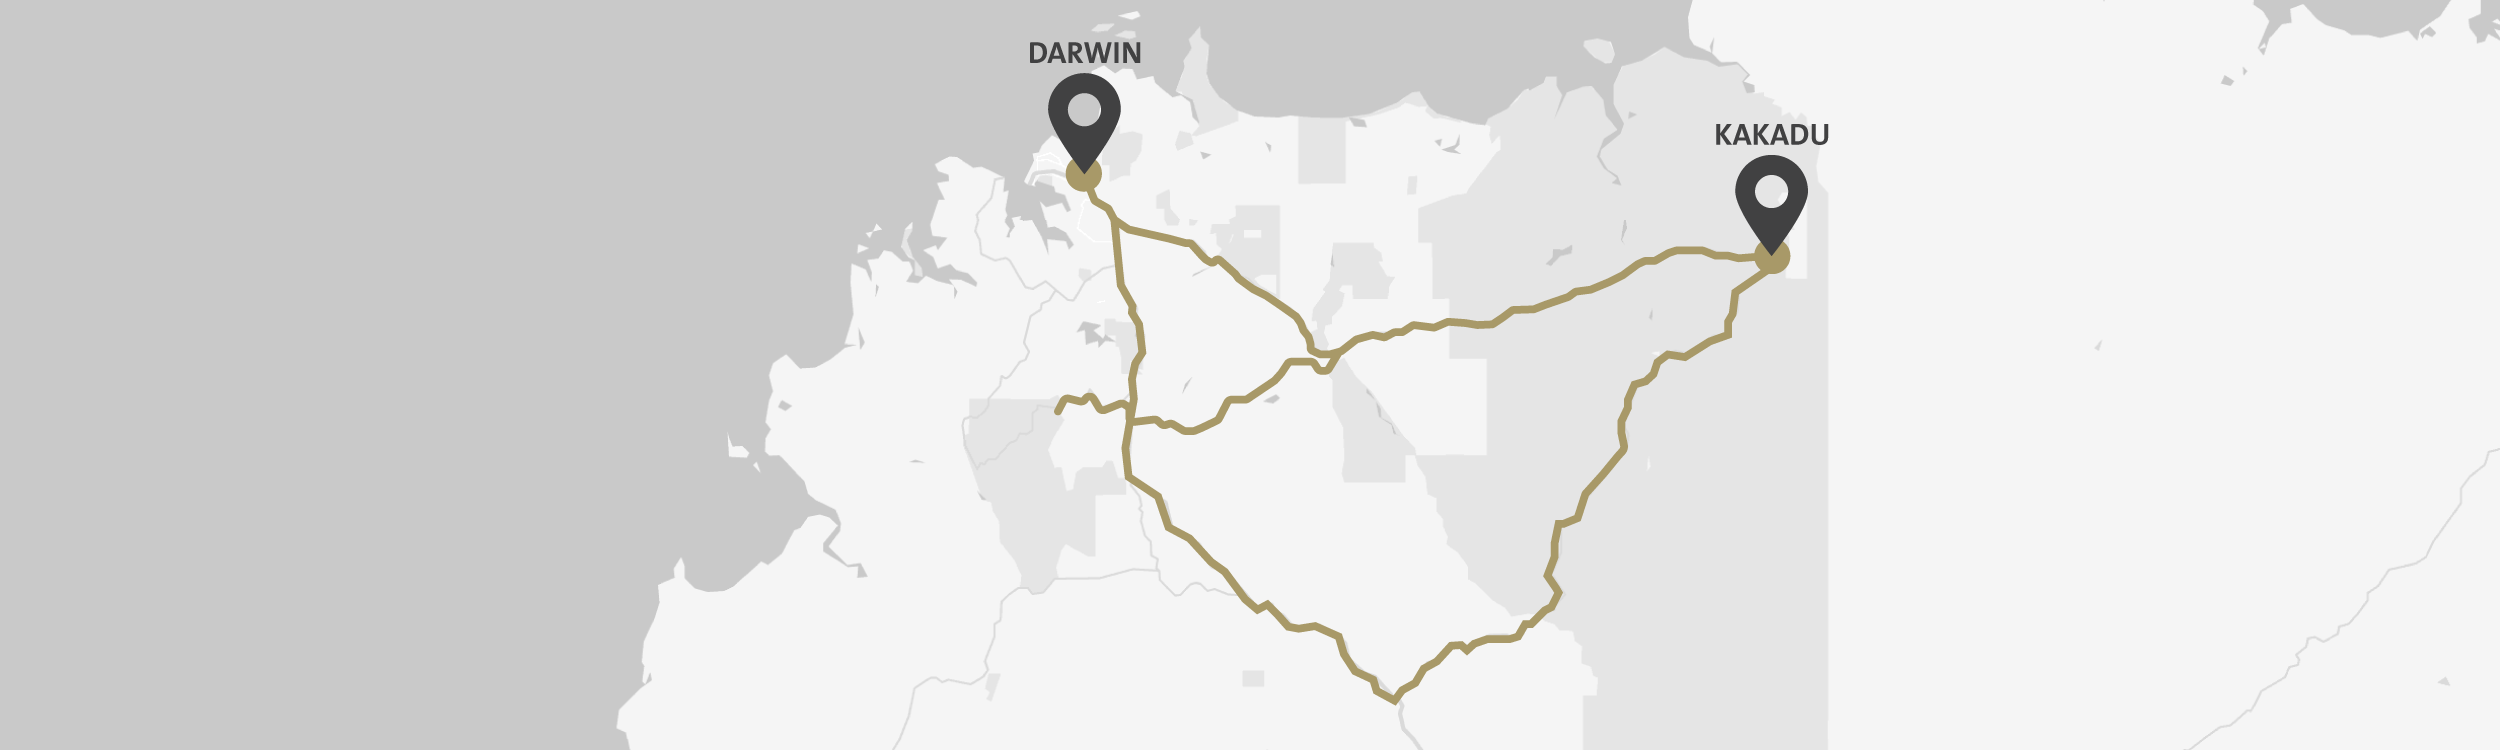 Darwin Kakadu Road Trip